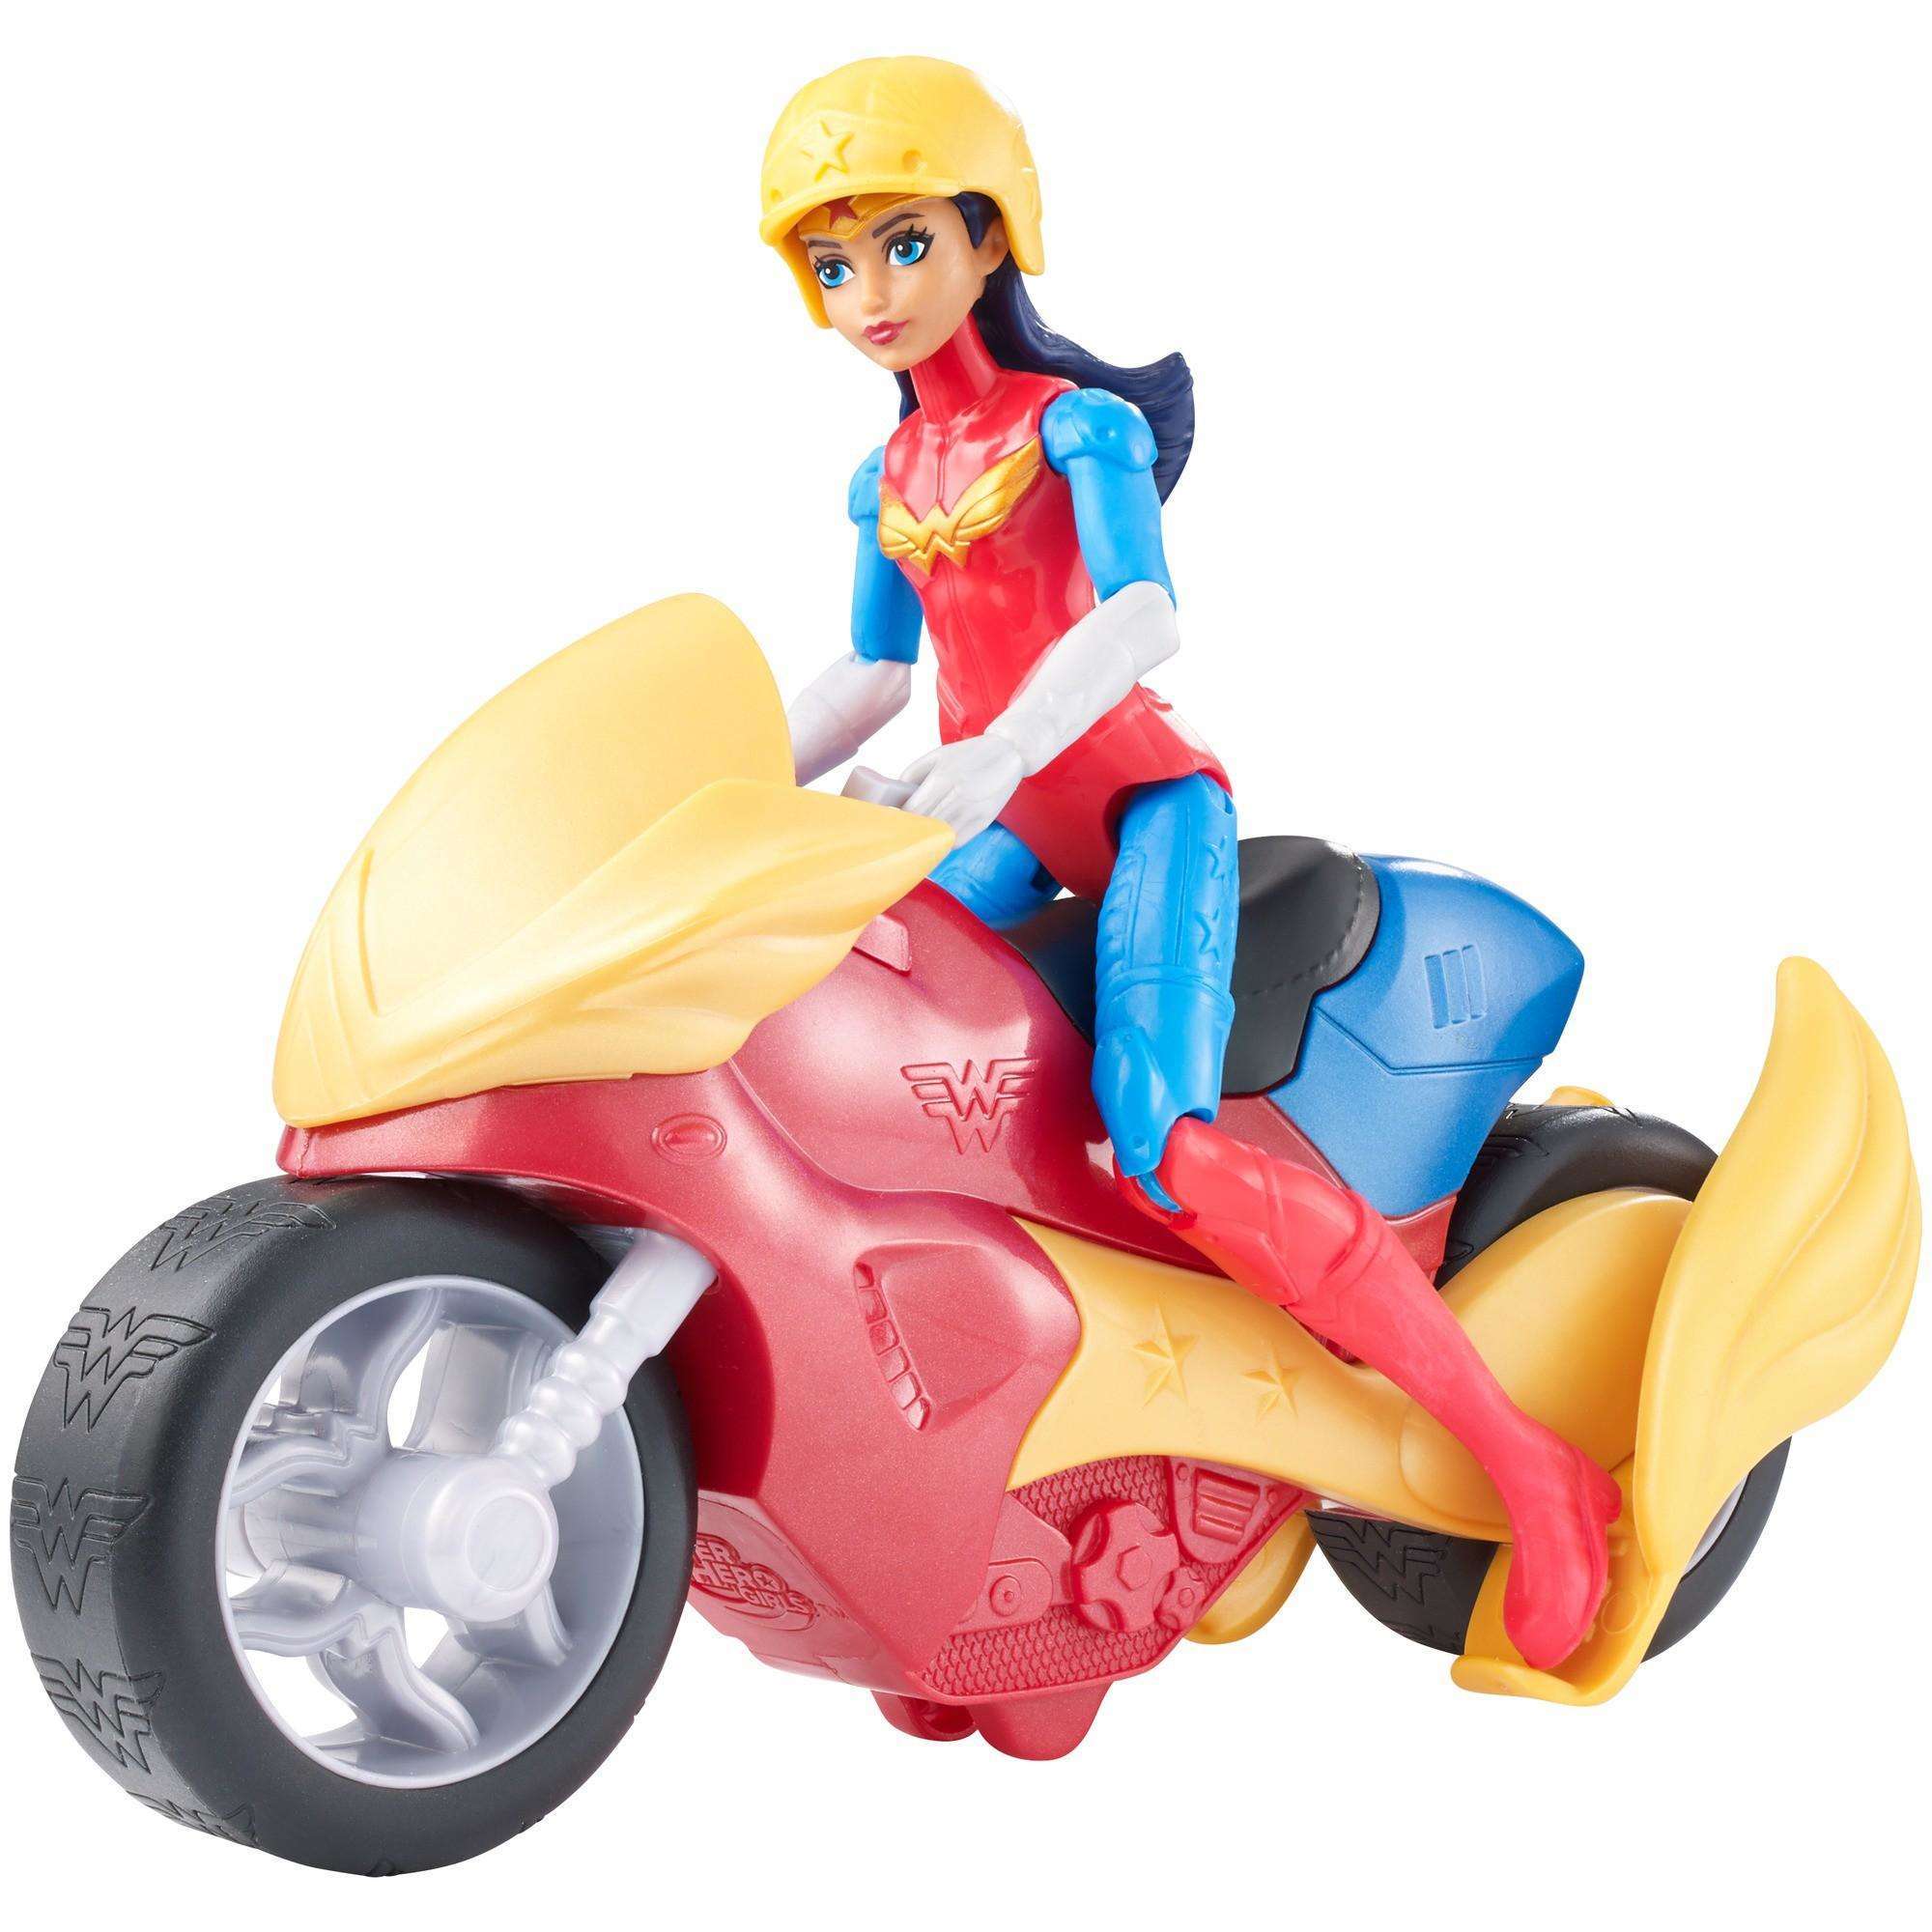 DC Super Hero Girls Wonder Woman & Motorcycle Doll - image 3 of 7